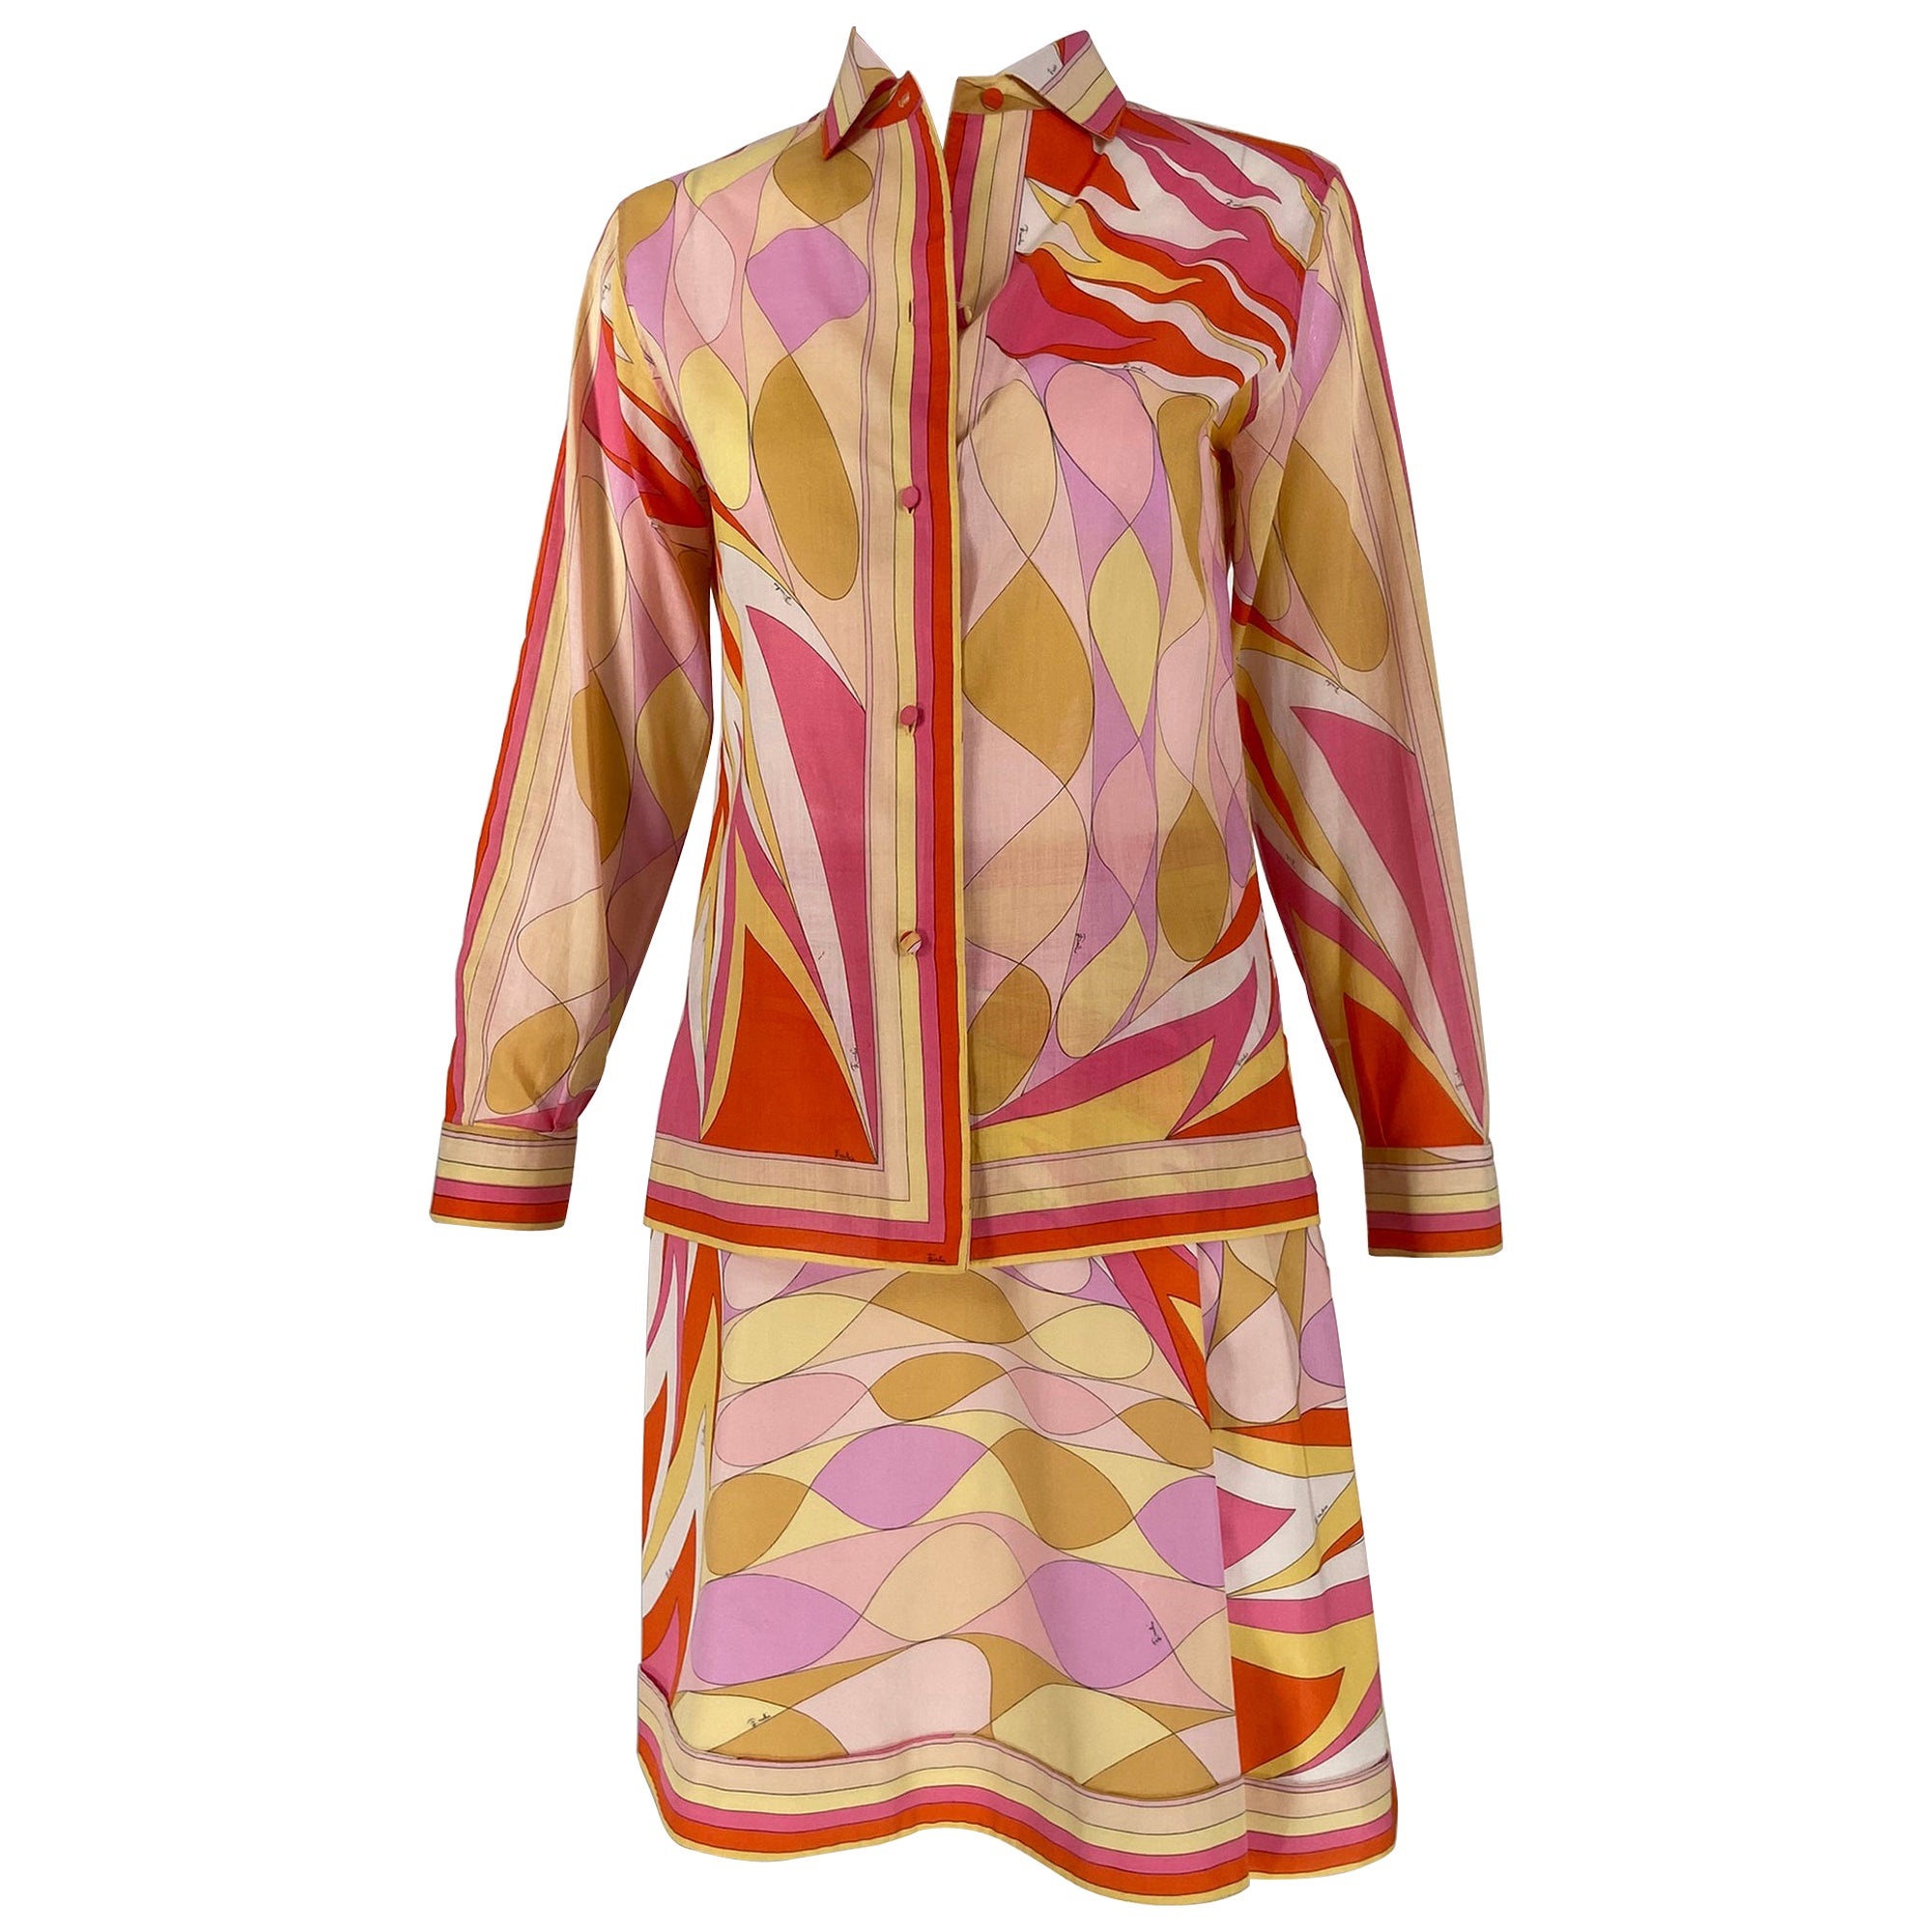 Kleding Dameskleding Pyjamas & Badjassen Nachthemden en tops Vintage Emilio pucci nachthemd met volledig kant & knoop voorkant en zakken petite 